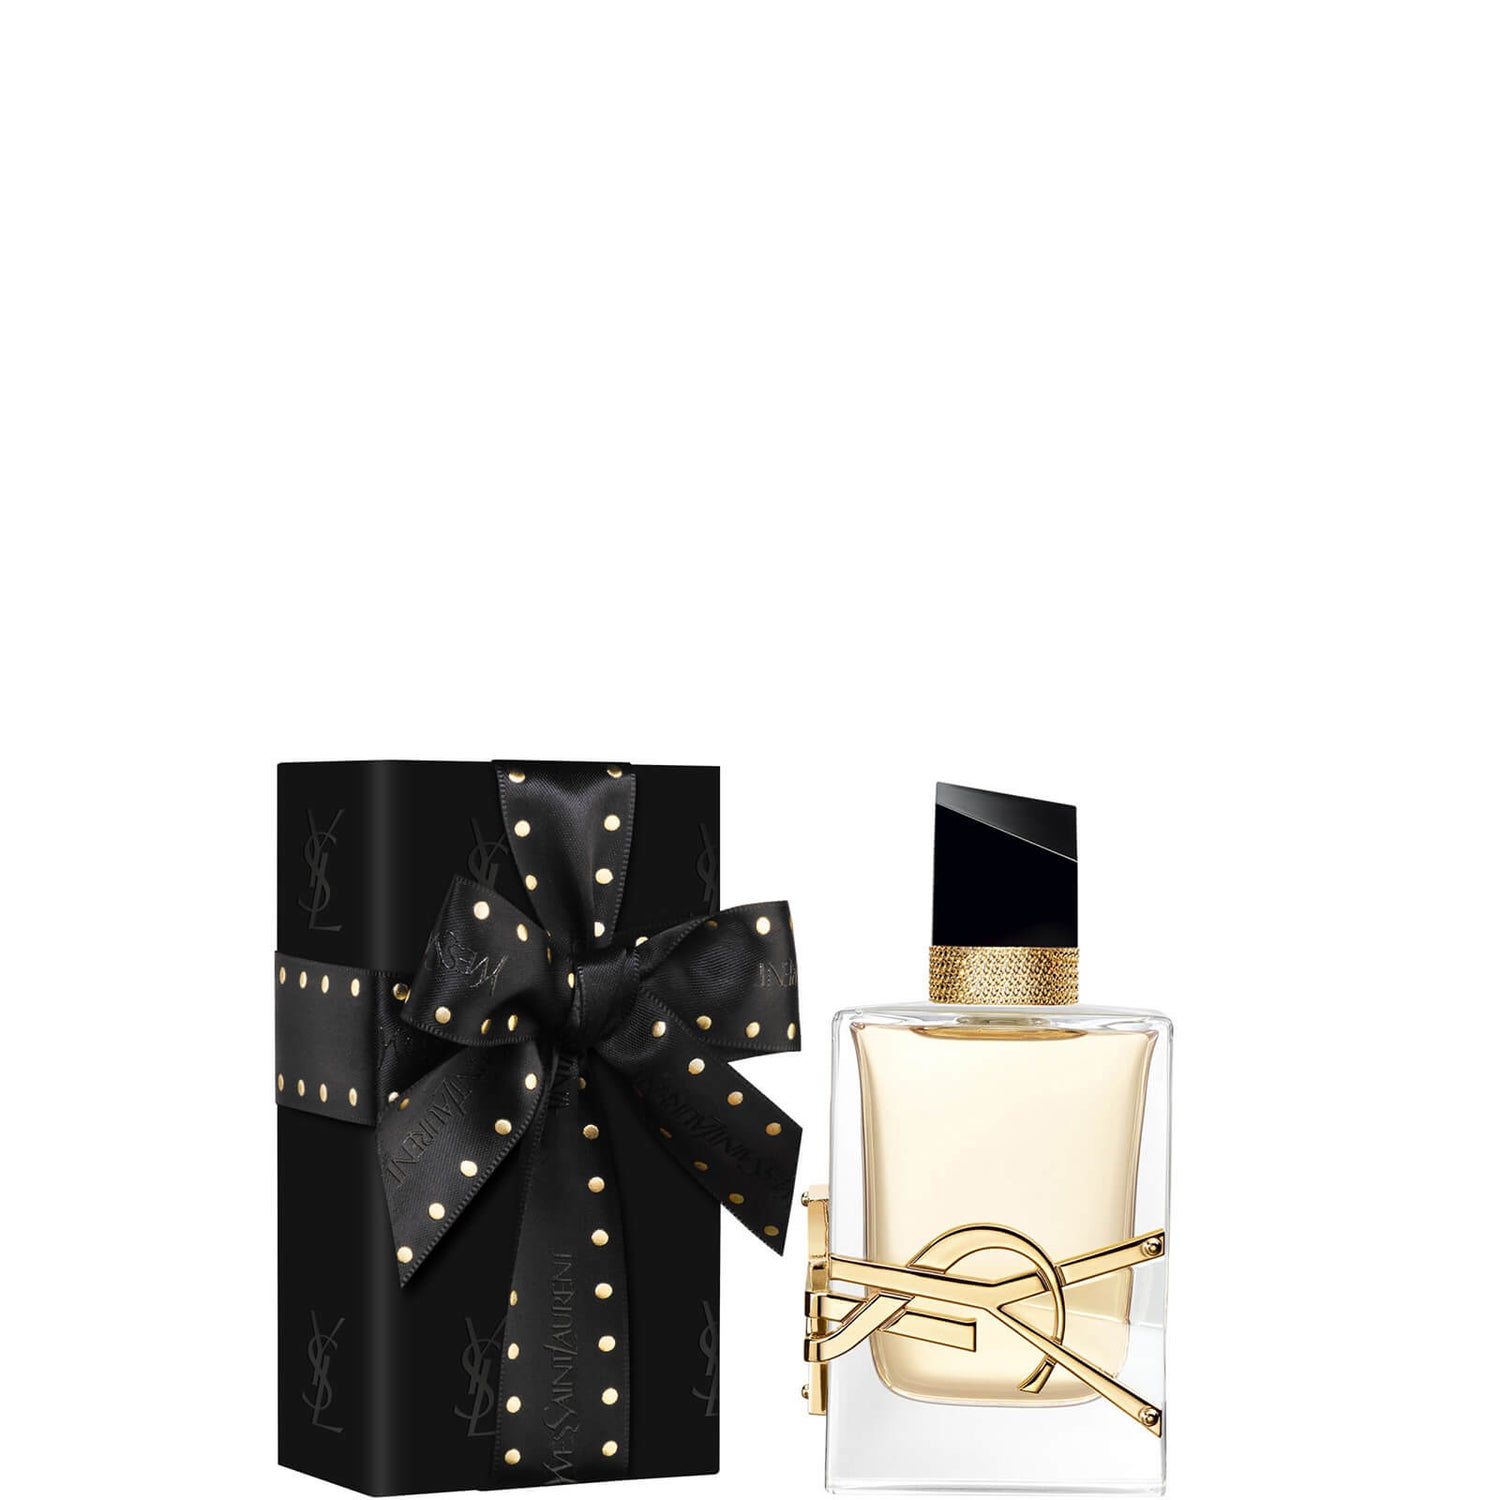 Yves Saint Laurent Pre-Wrapped Libre Eau de Parfum woda perfumowana – 50 ml